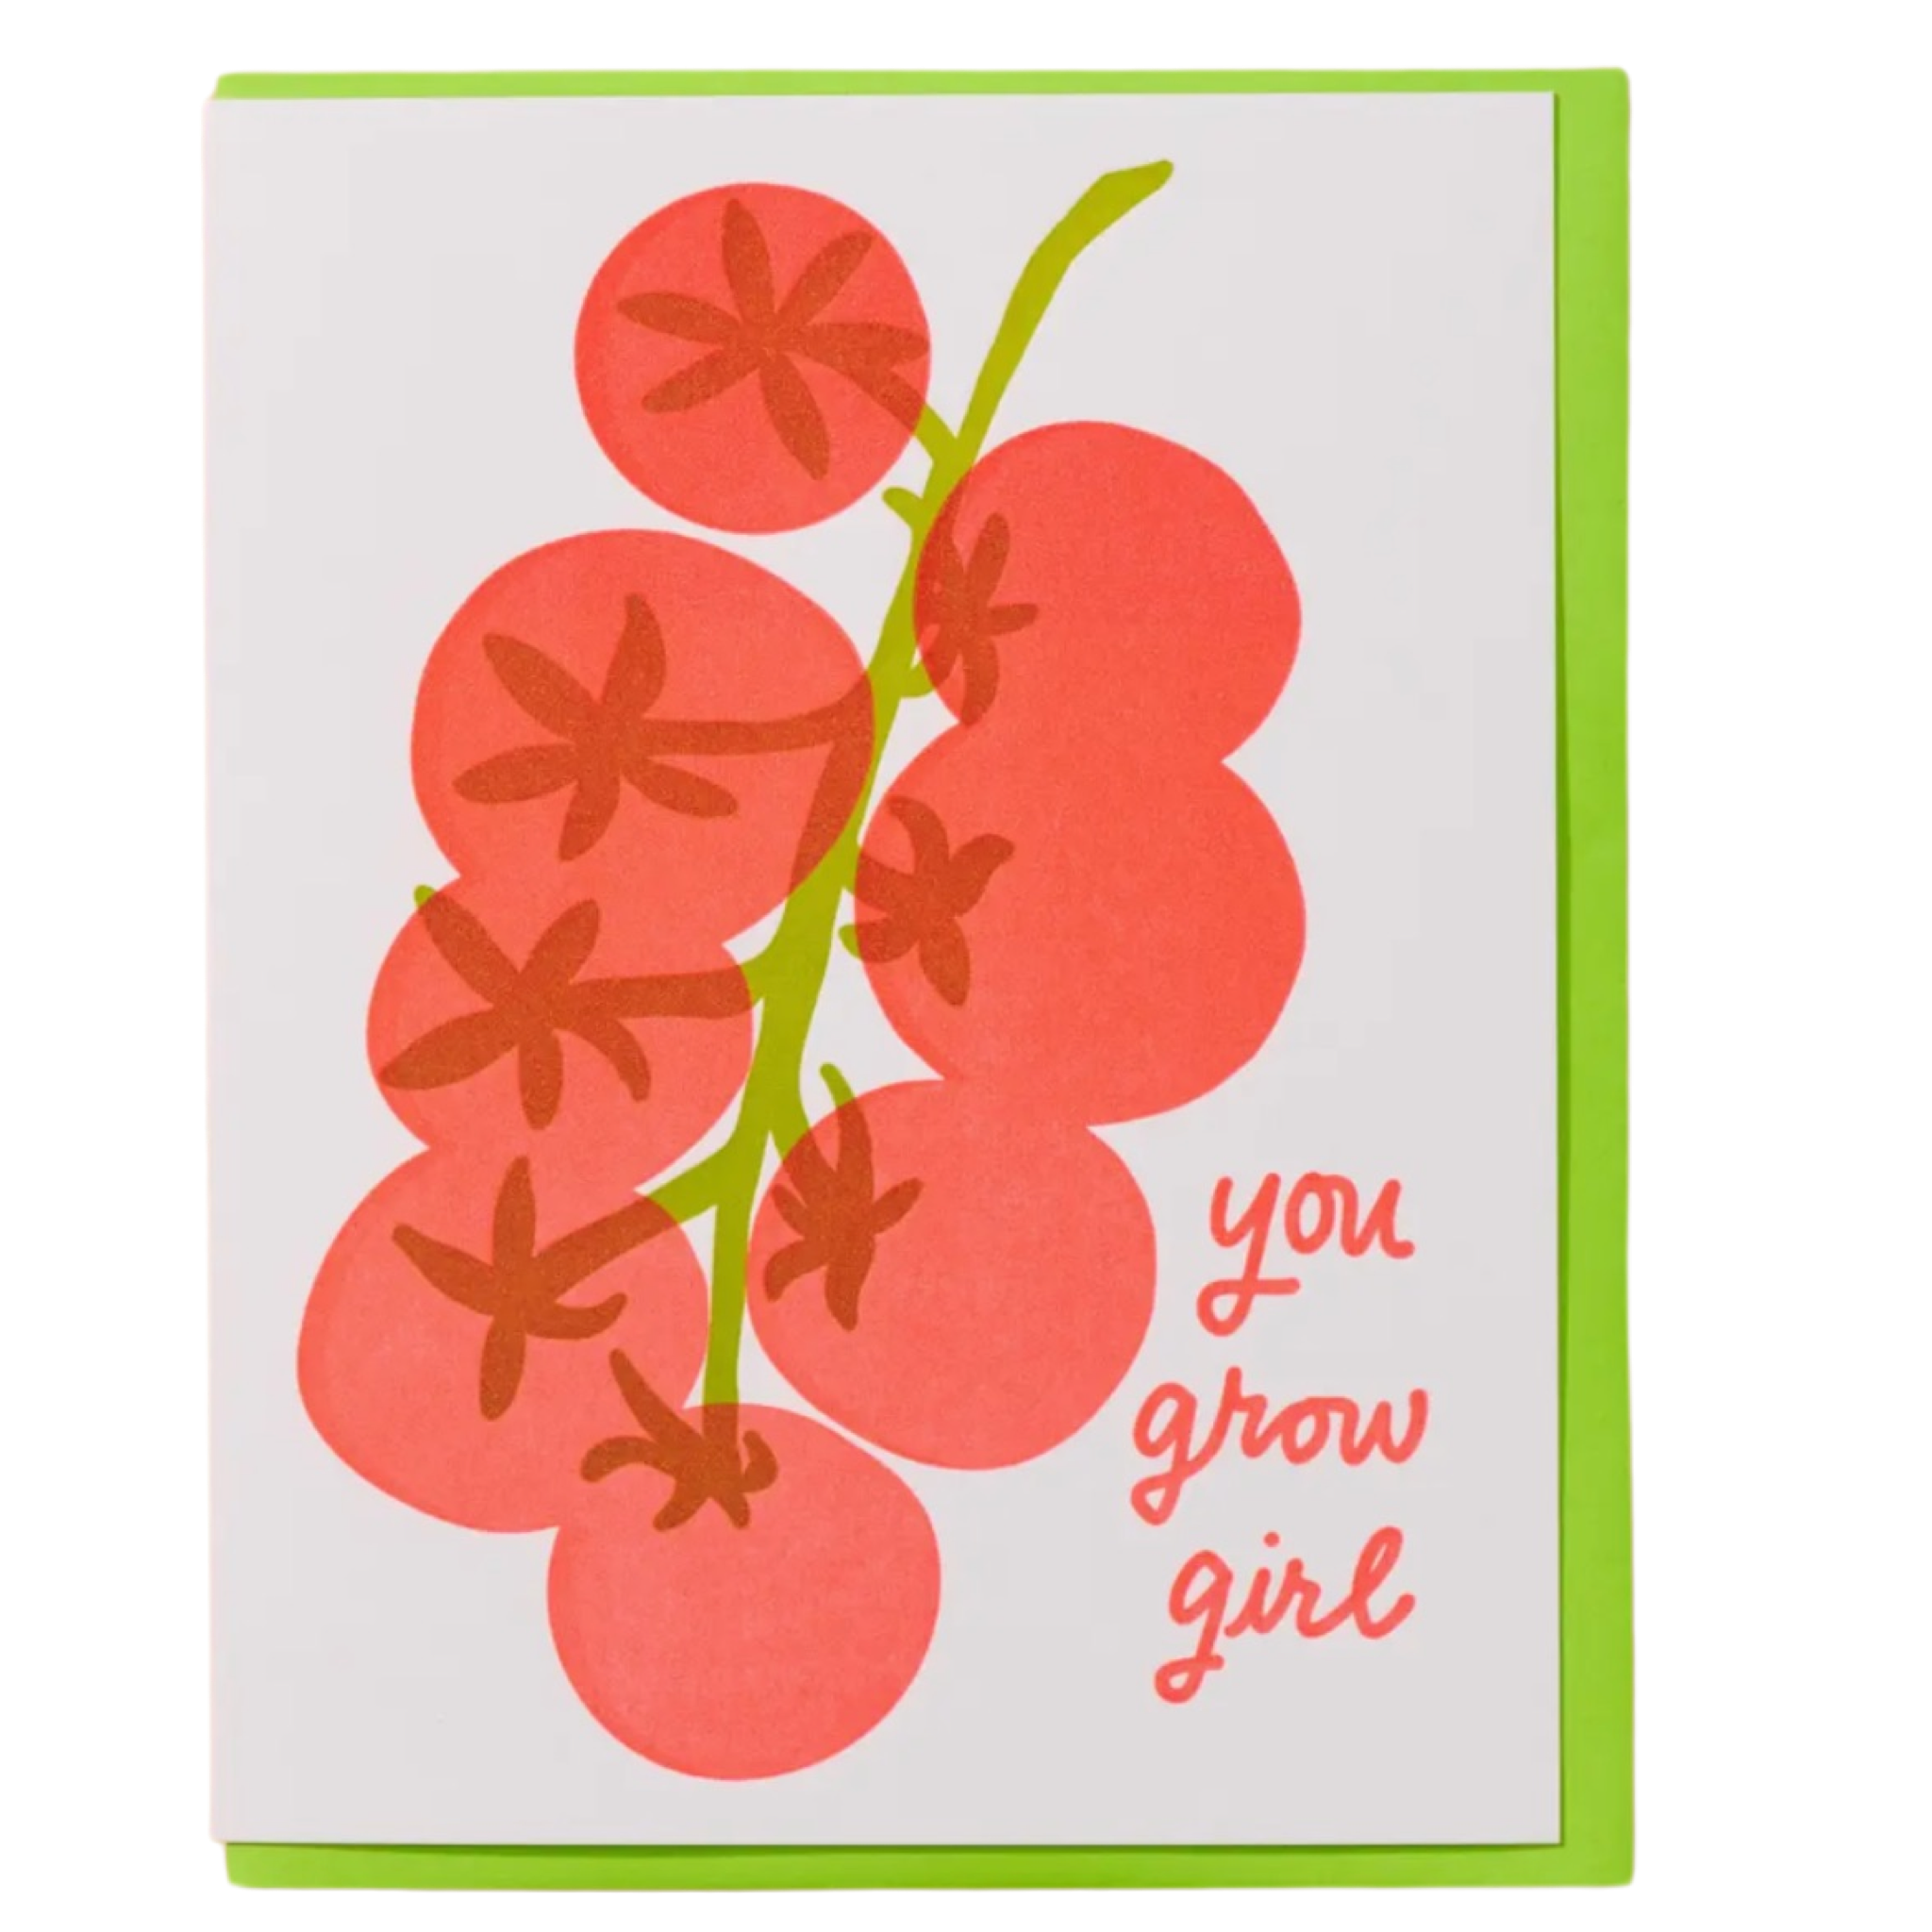 Grow (Tomato) Girl Letterpress Card